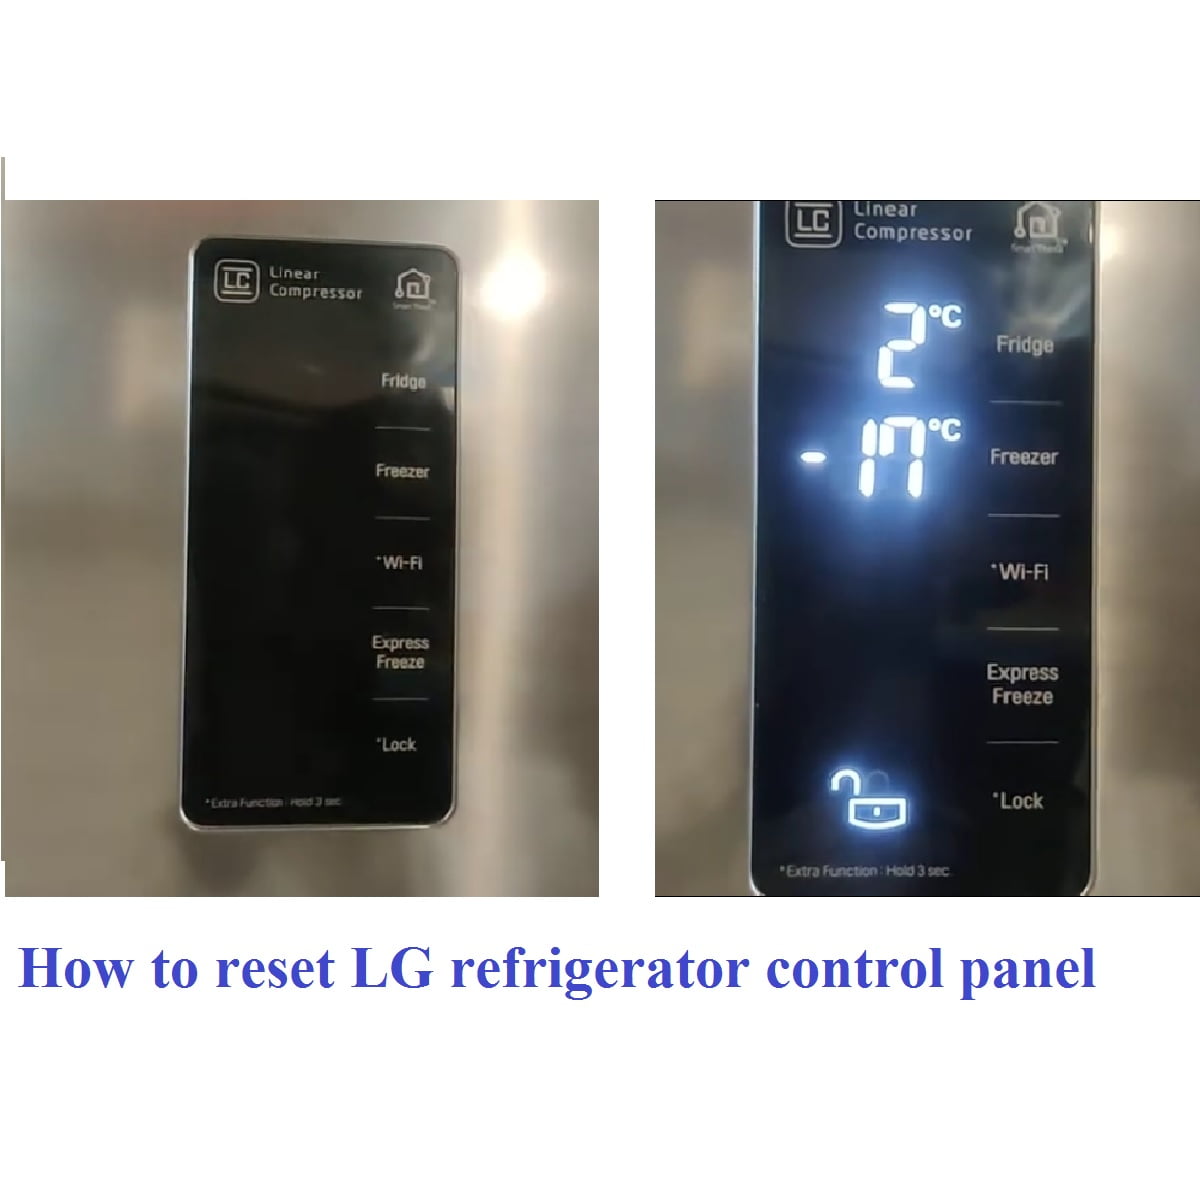 LG refrigerator control panel reset steps